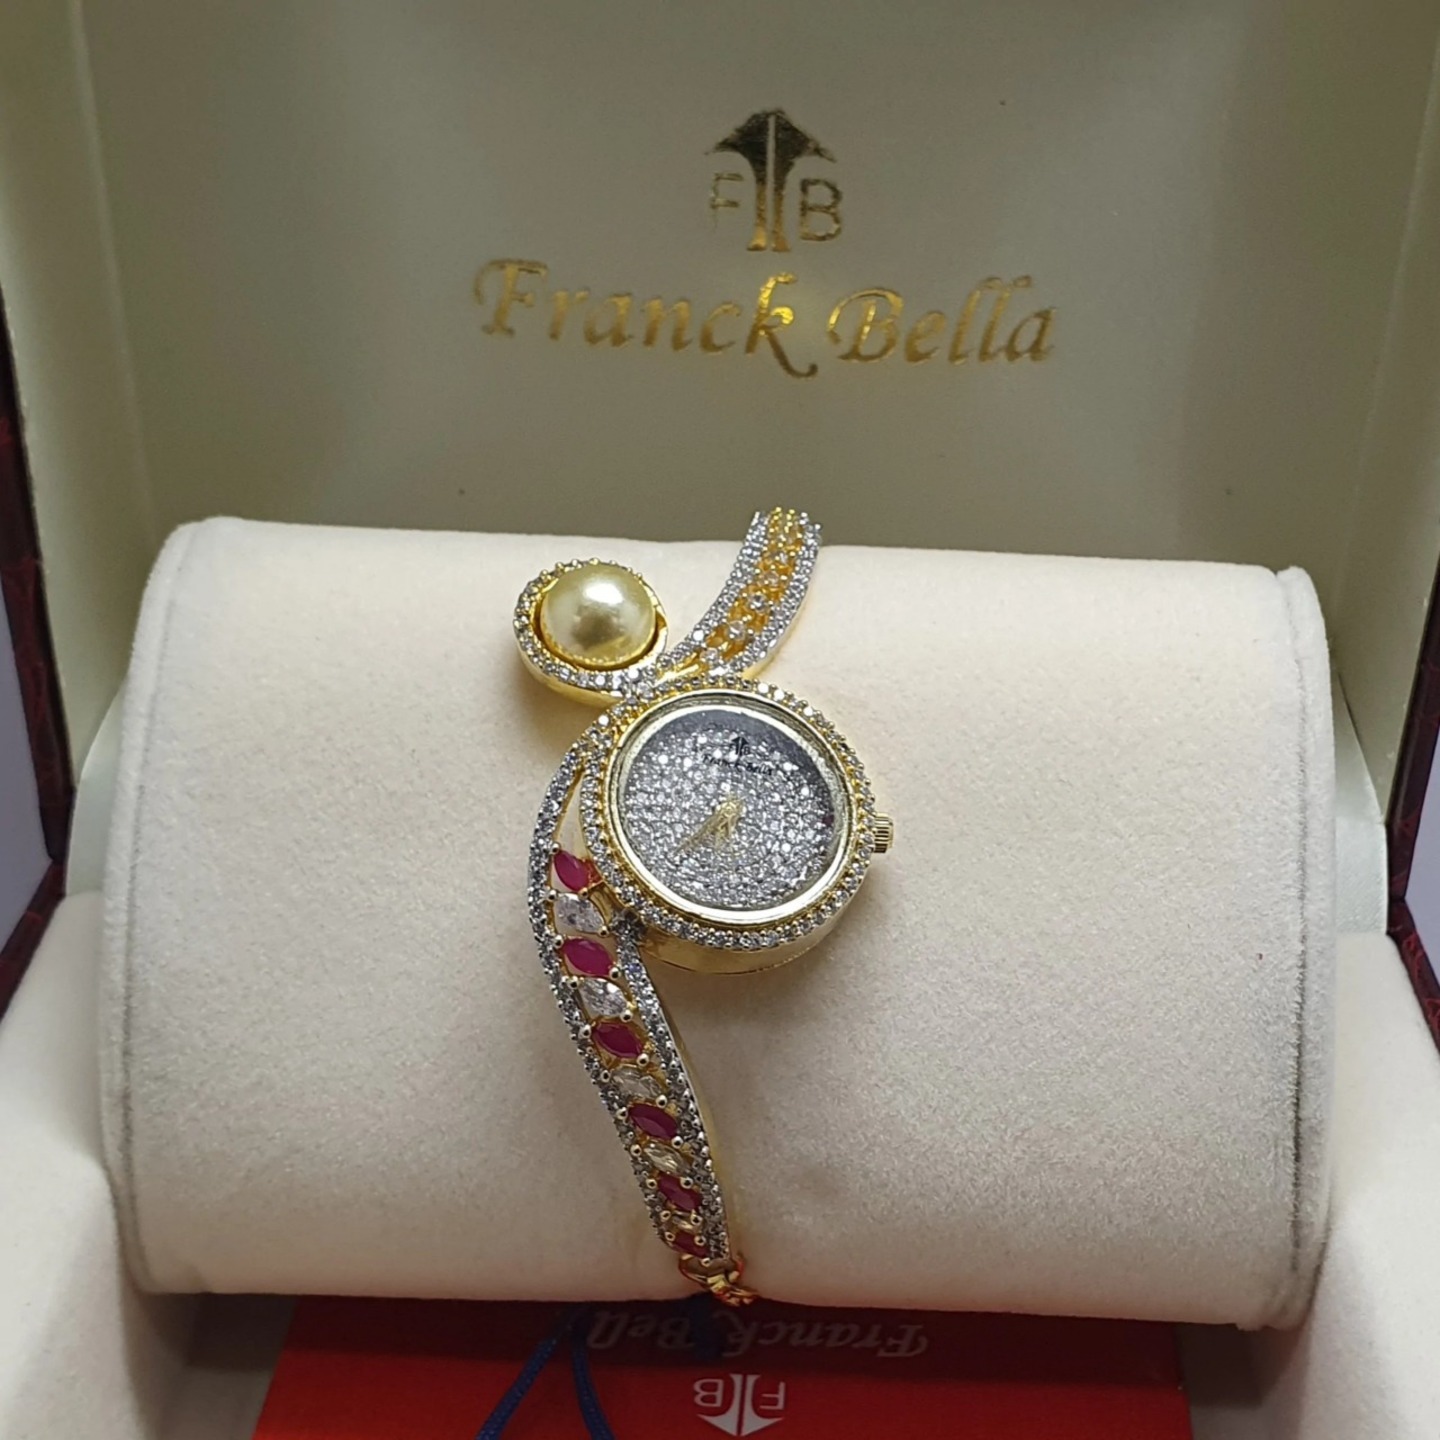 Ruby Red Diamond Frank Bella Wrist Watch - with 1 year warranty